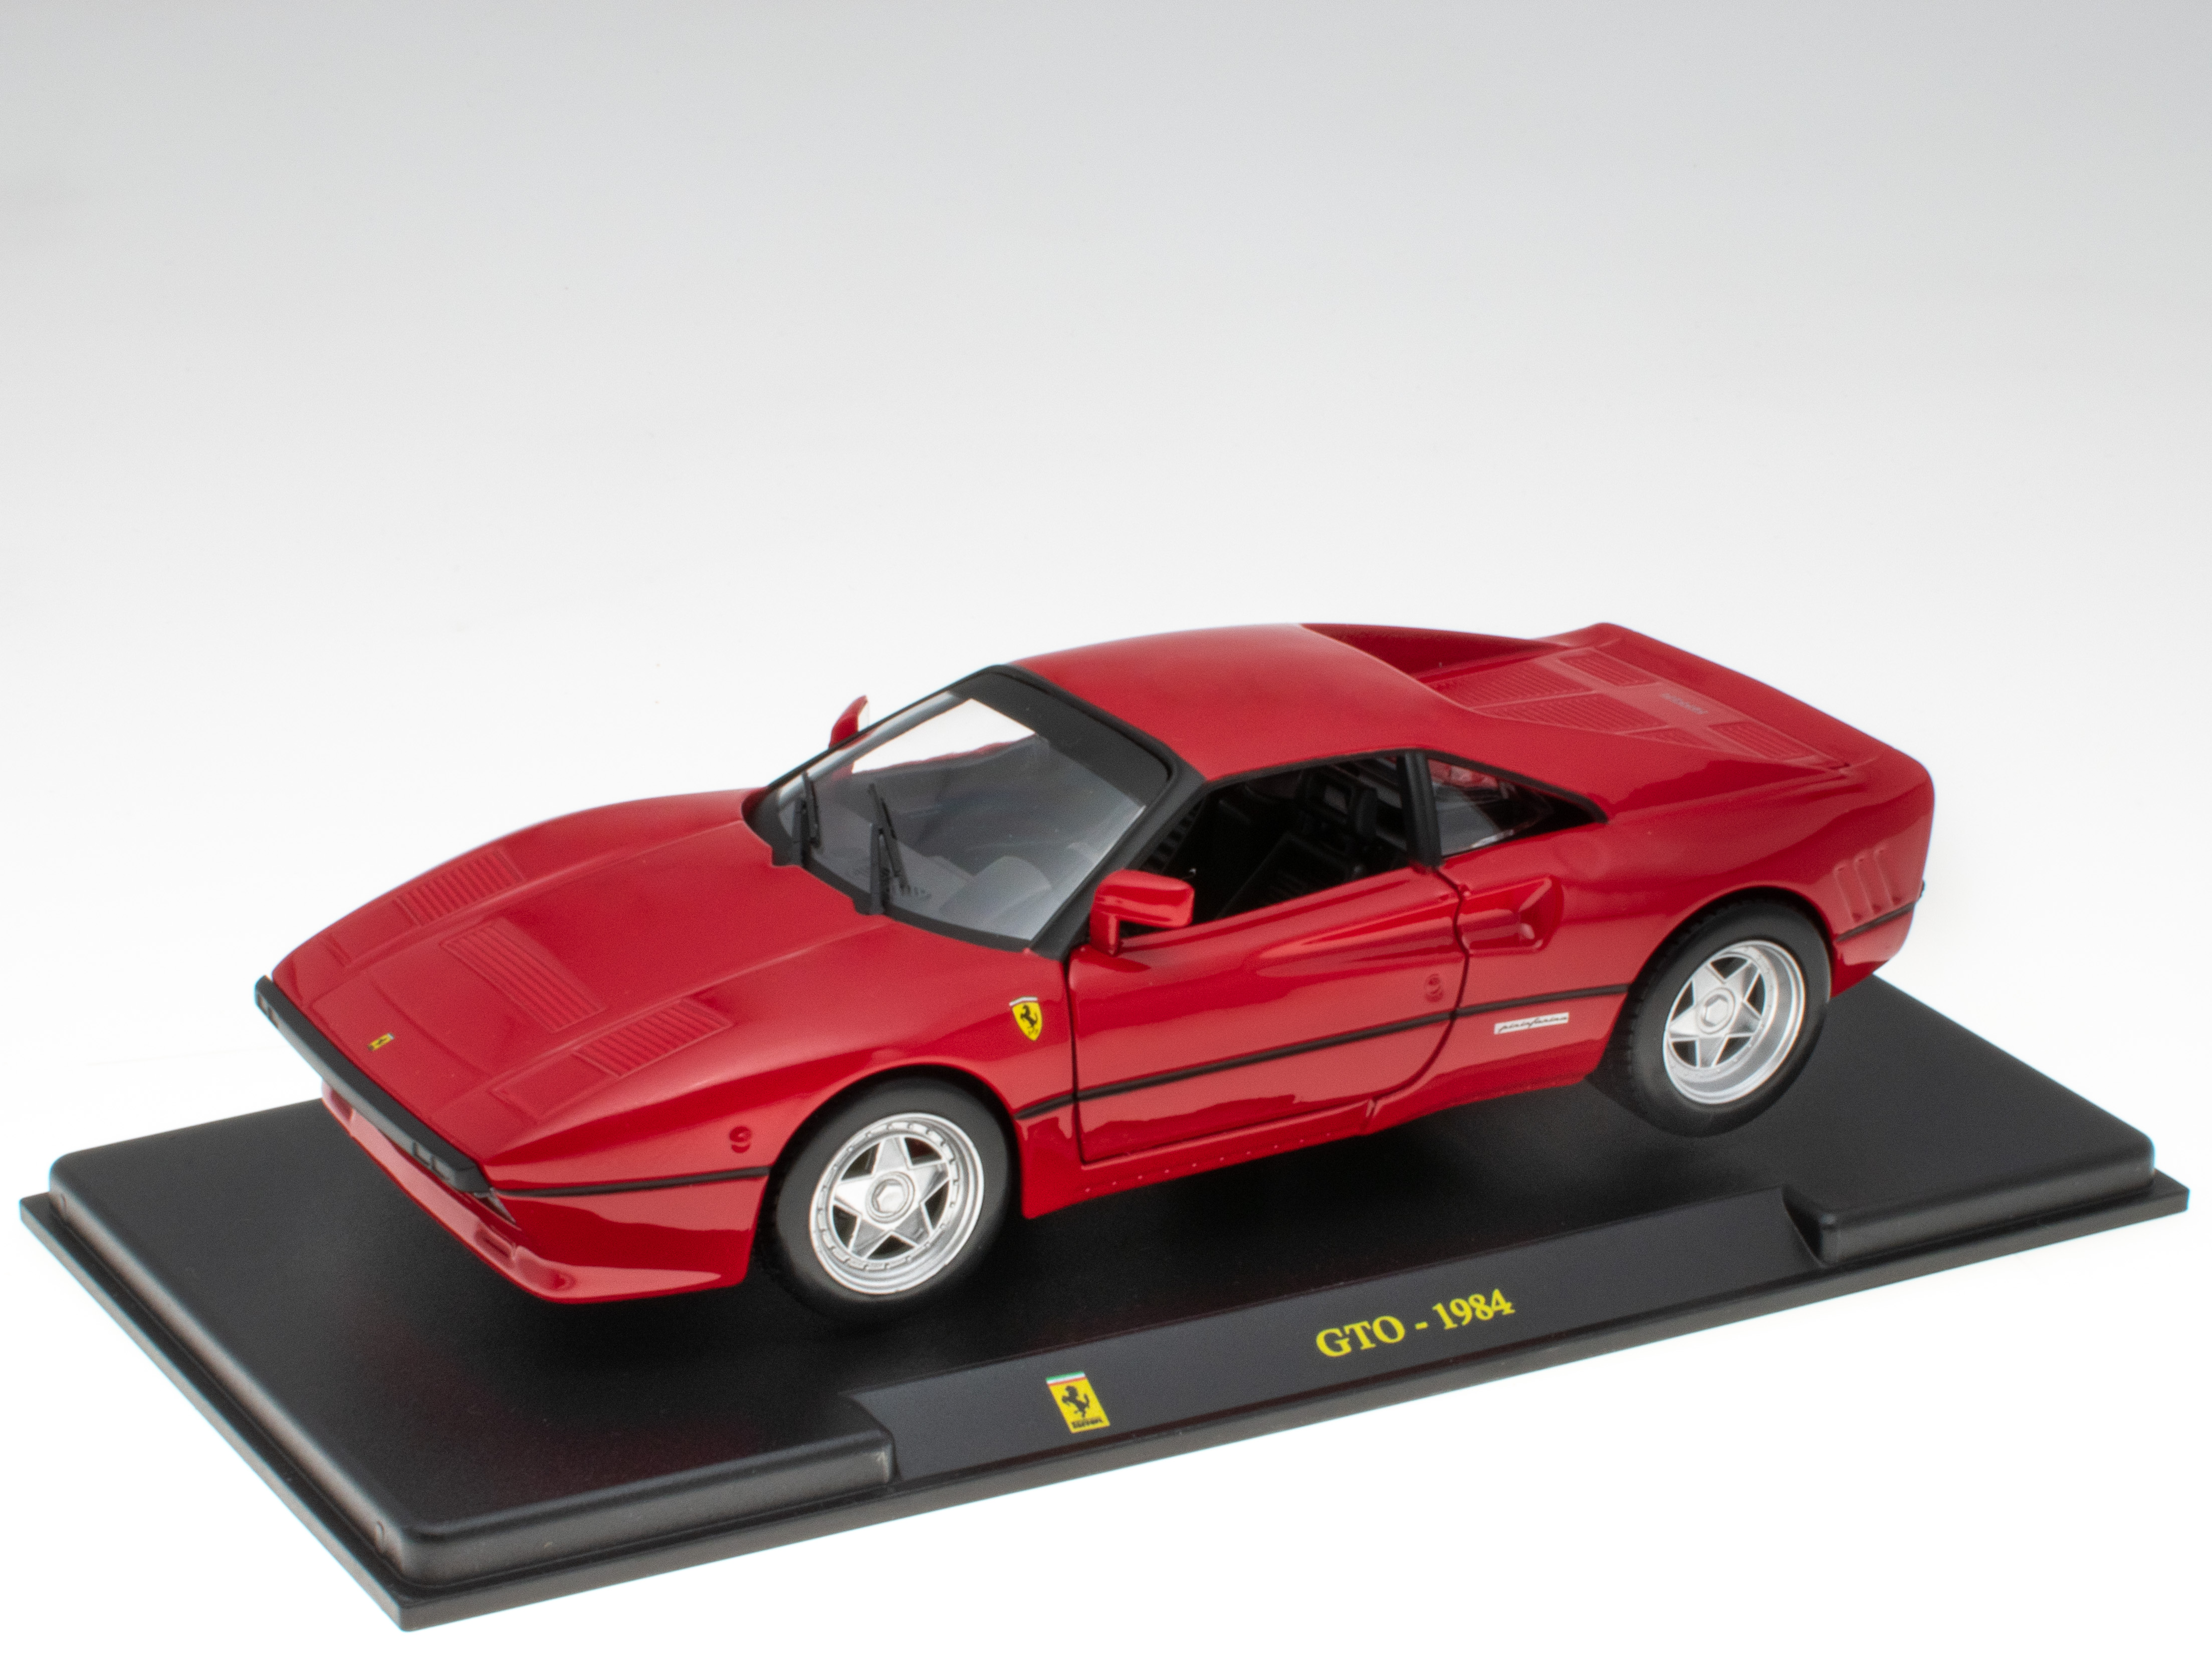 Ferrari GTO - 1984